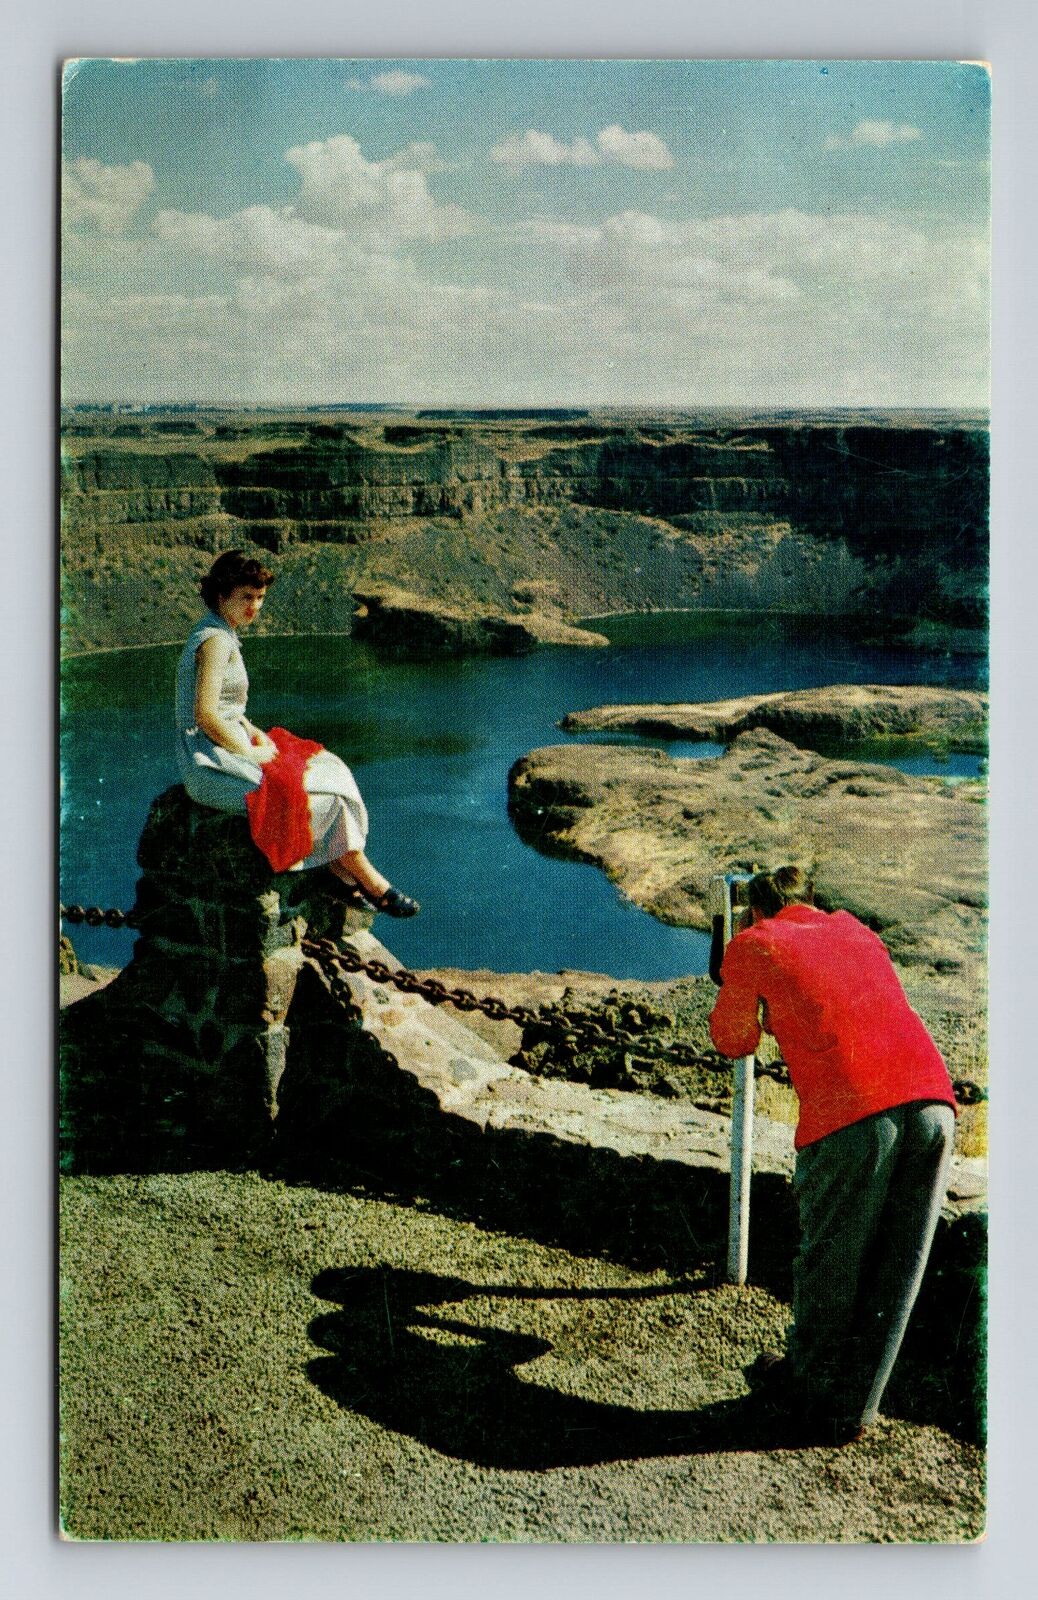 Olympia WA-Washington, Dry Falls State Park, Scenic, Vintage Postcard